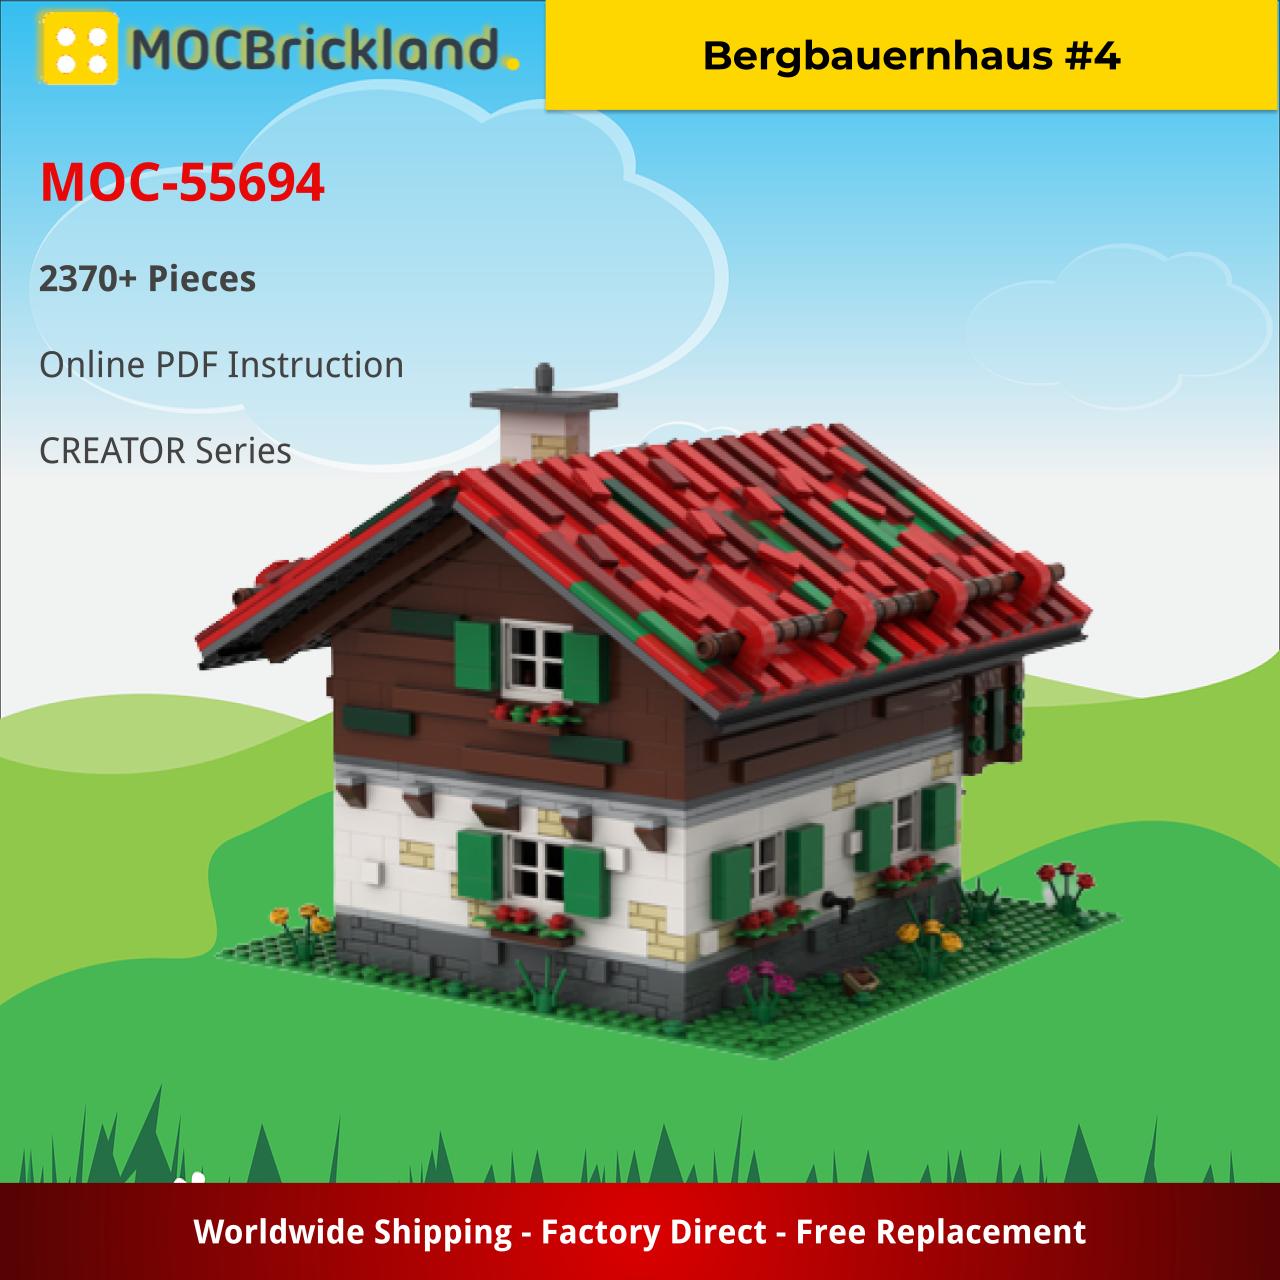 MOCBRICKLAND MOC-55694 Bergbauernhaus #4